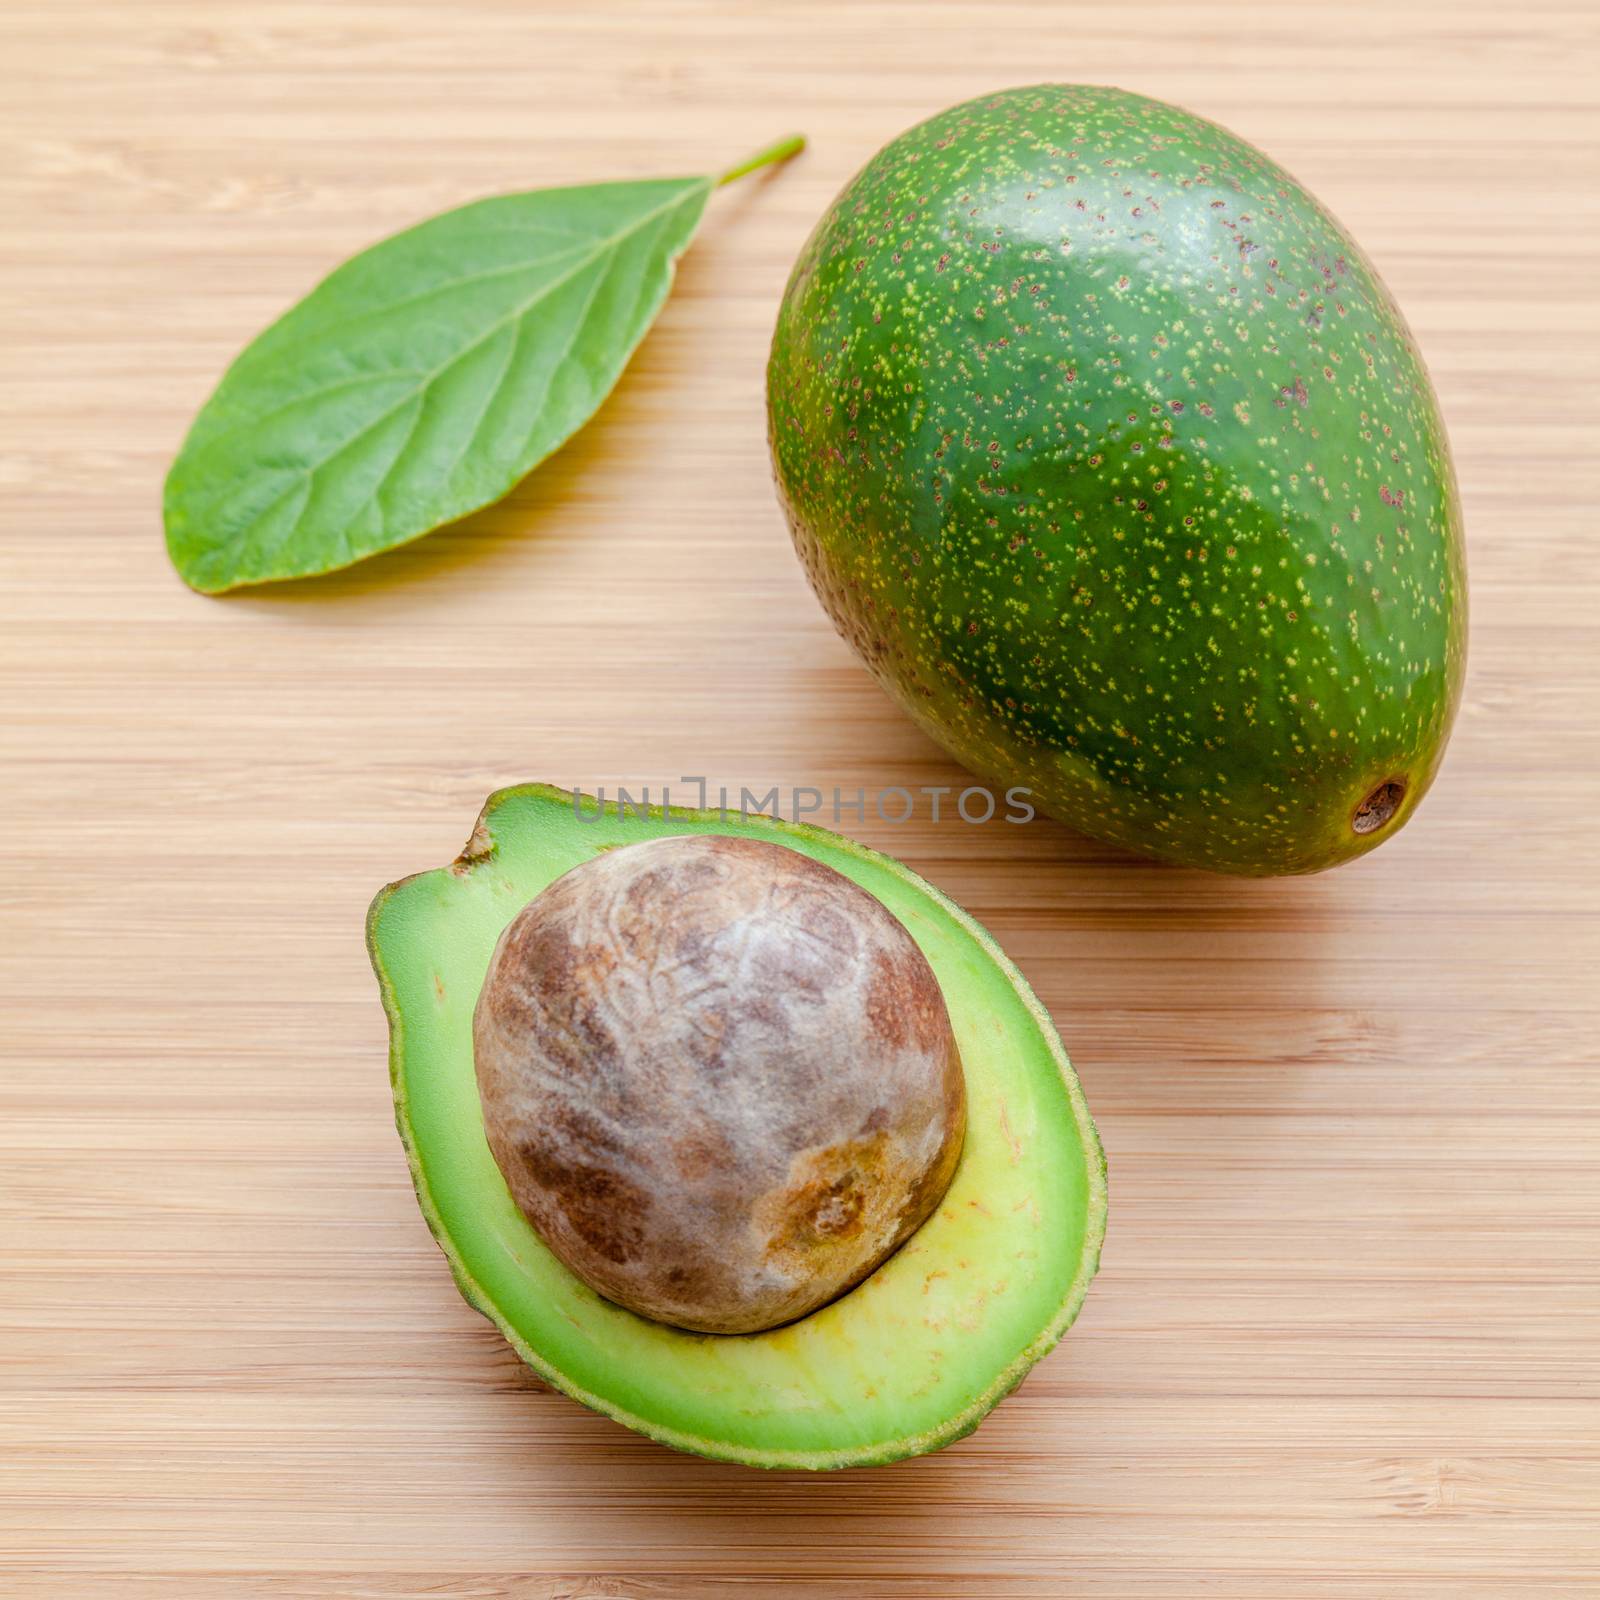 Fresh avocado on wooden background. Organic avocado healthy food by kerdkanno